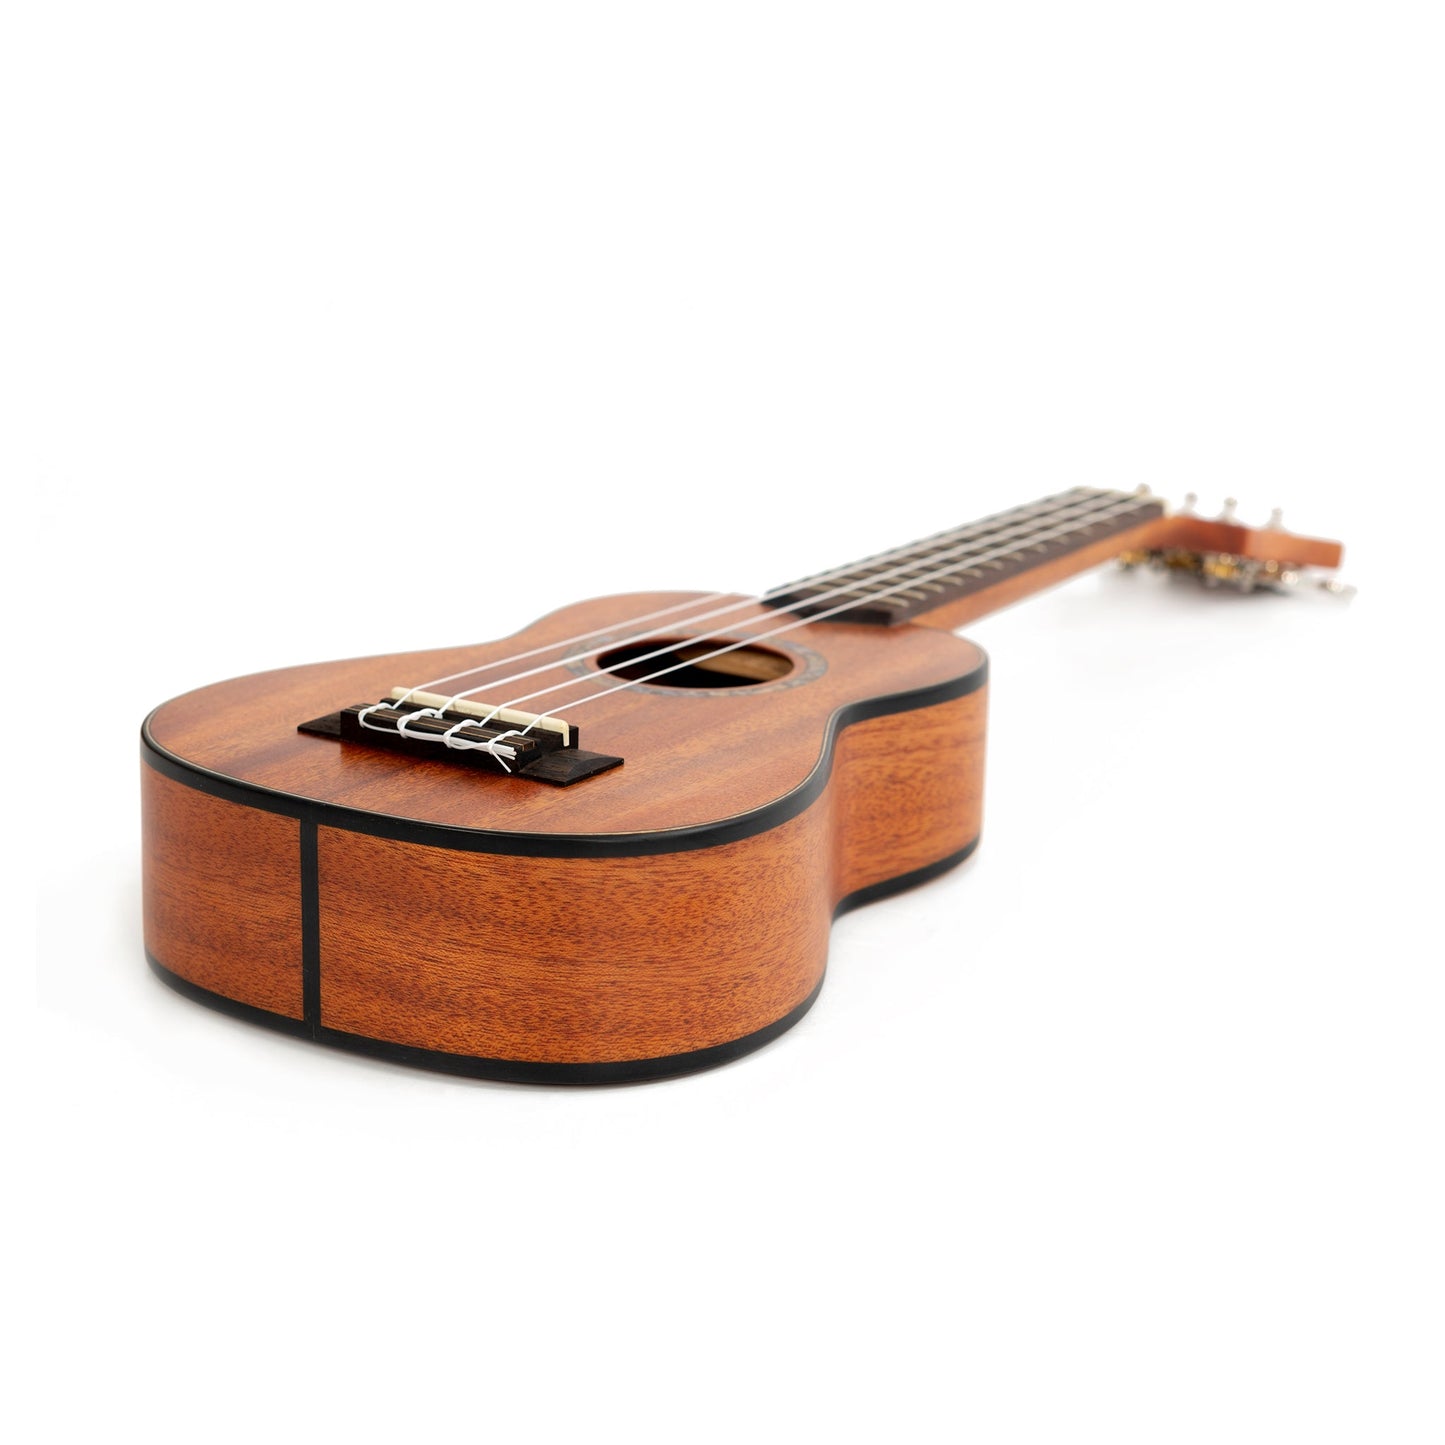 Octopus UK480S Soprano ukulele – All solid mahogany